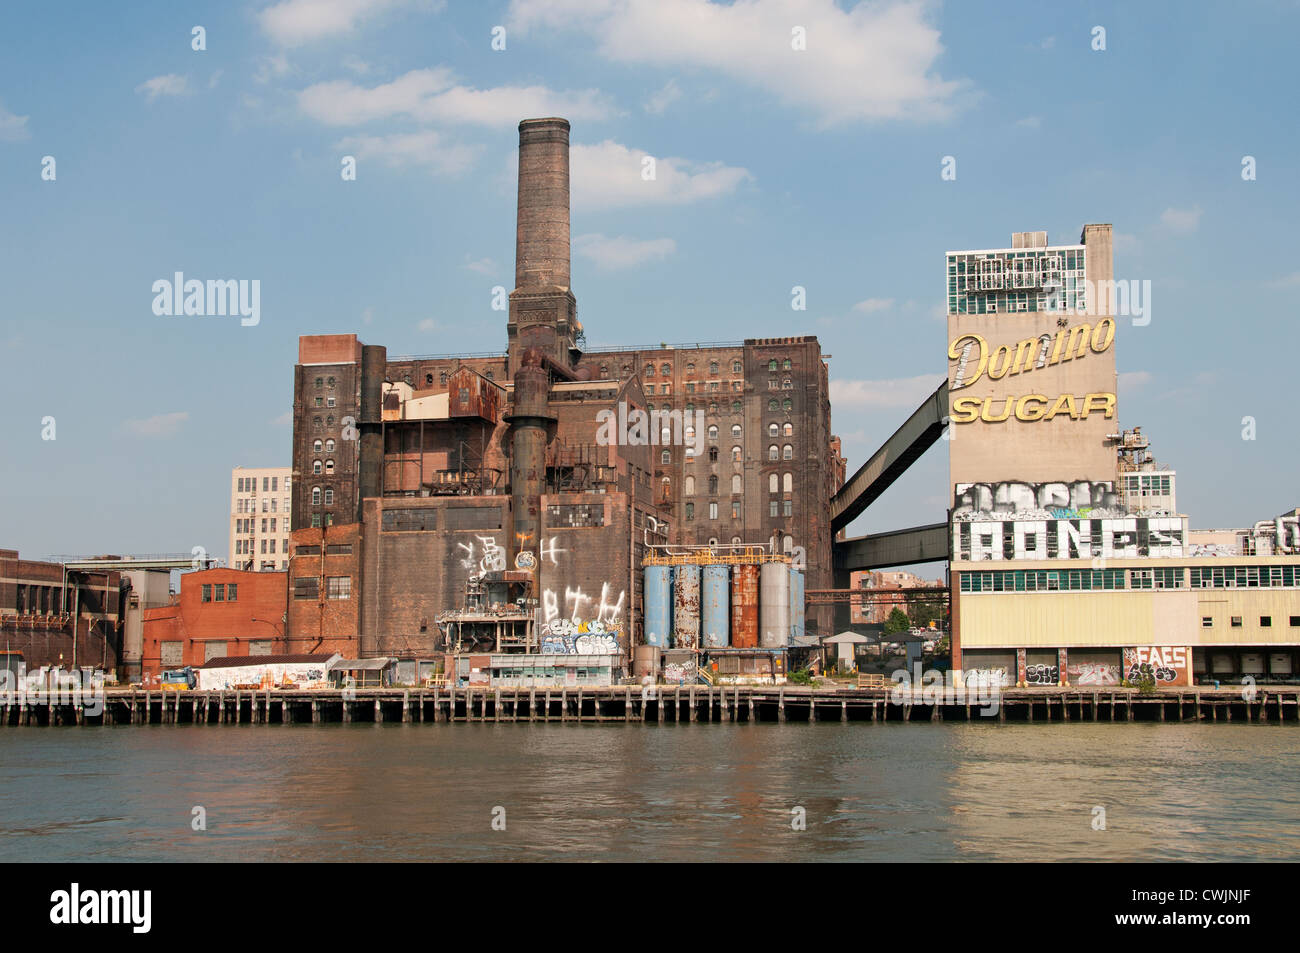 Domino raffineria di zucchero Williamsburg Brooklyn New York Stati Uniti d'America Foto Stock